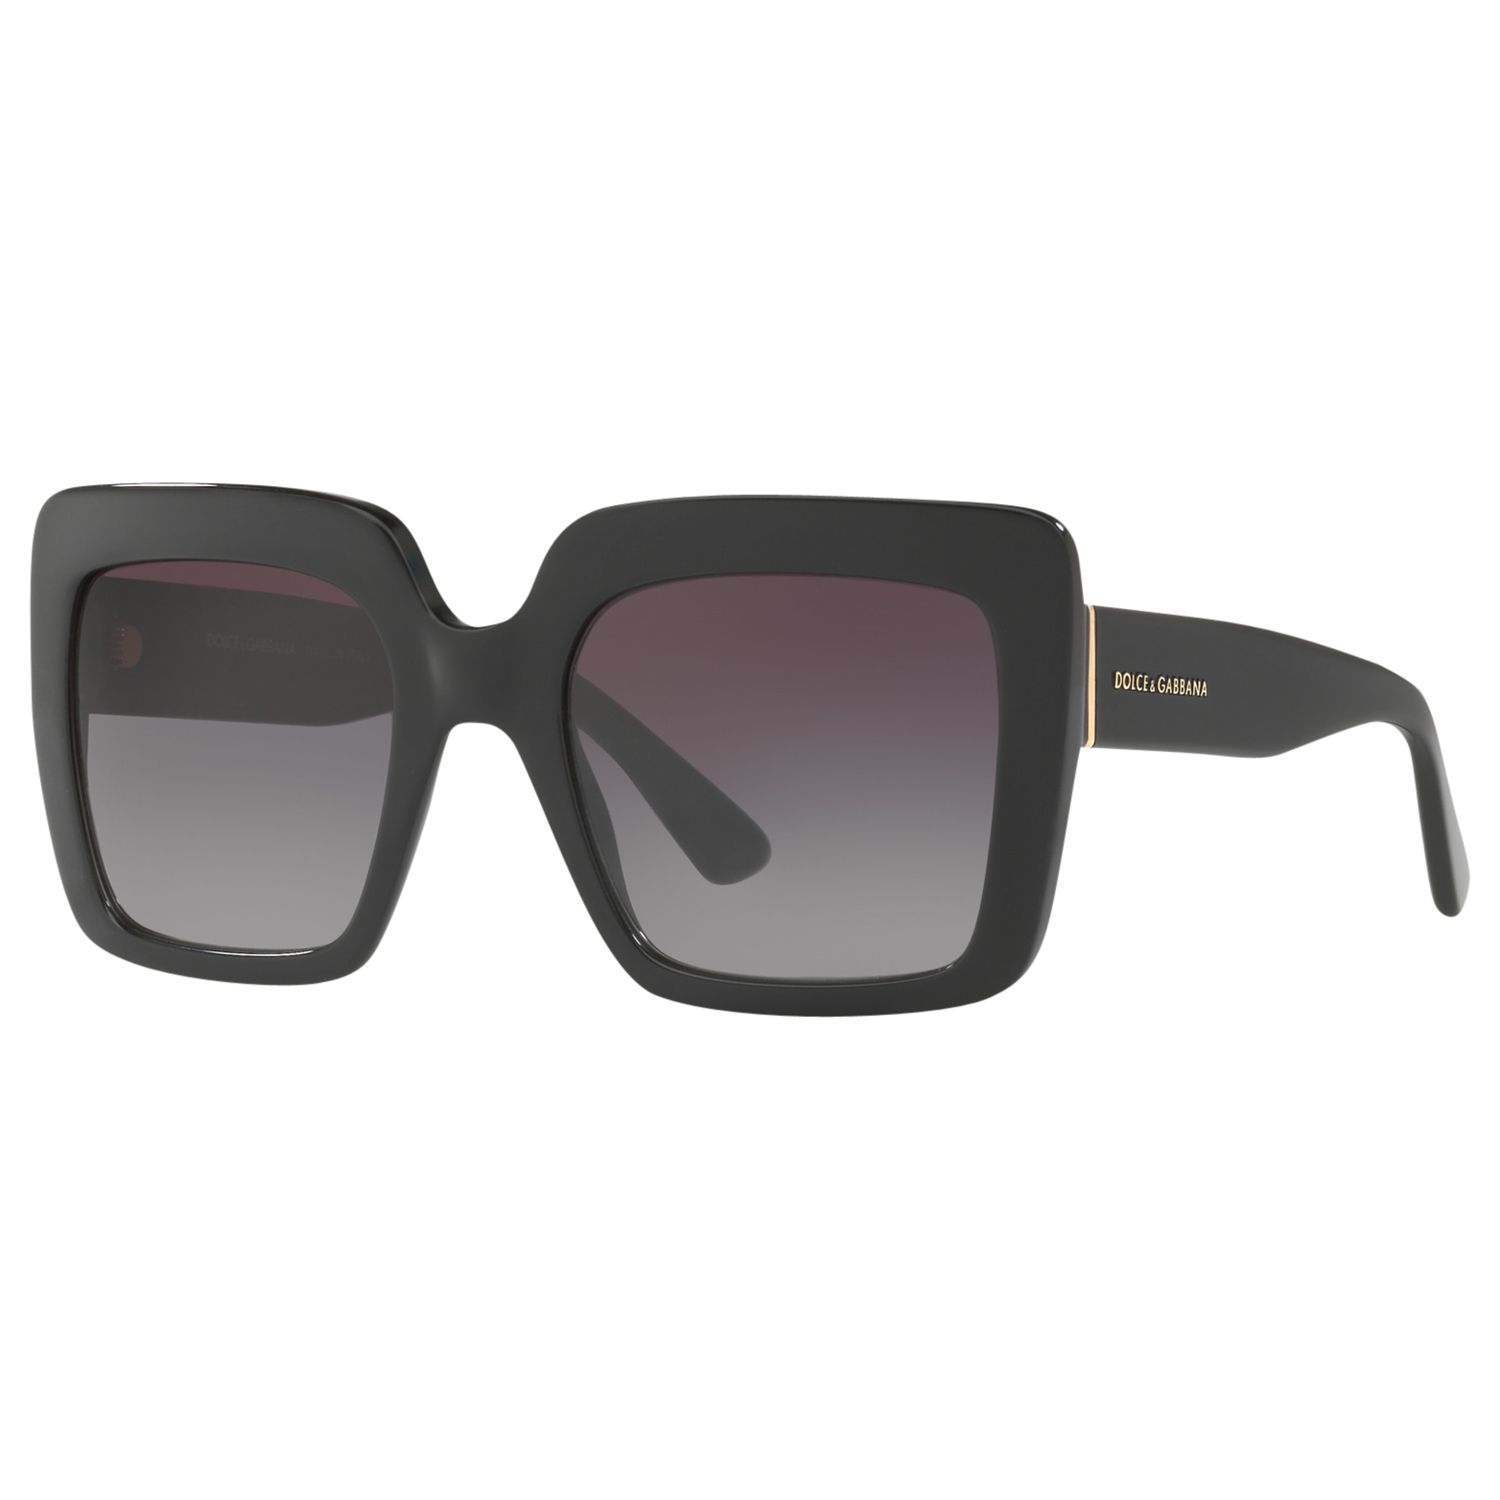 Dolce & Gabbana DG4310 Oversize Square Sunglasses, Black/Grey Gradient